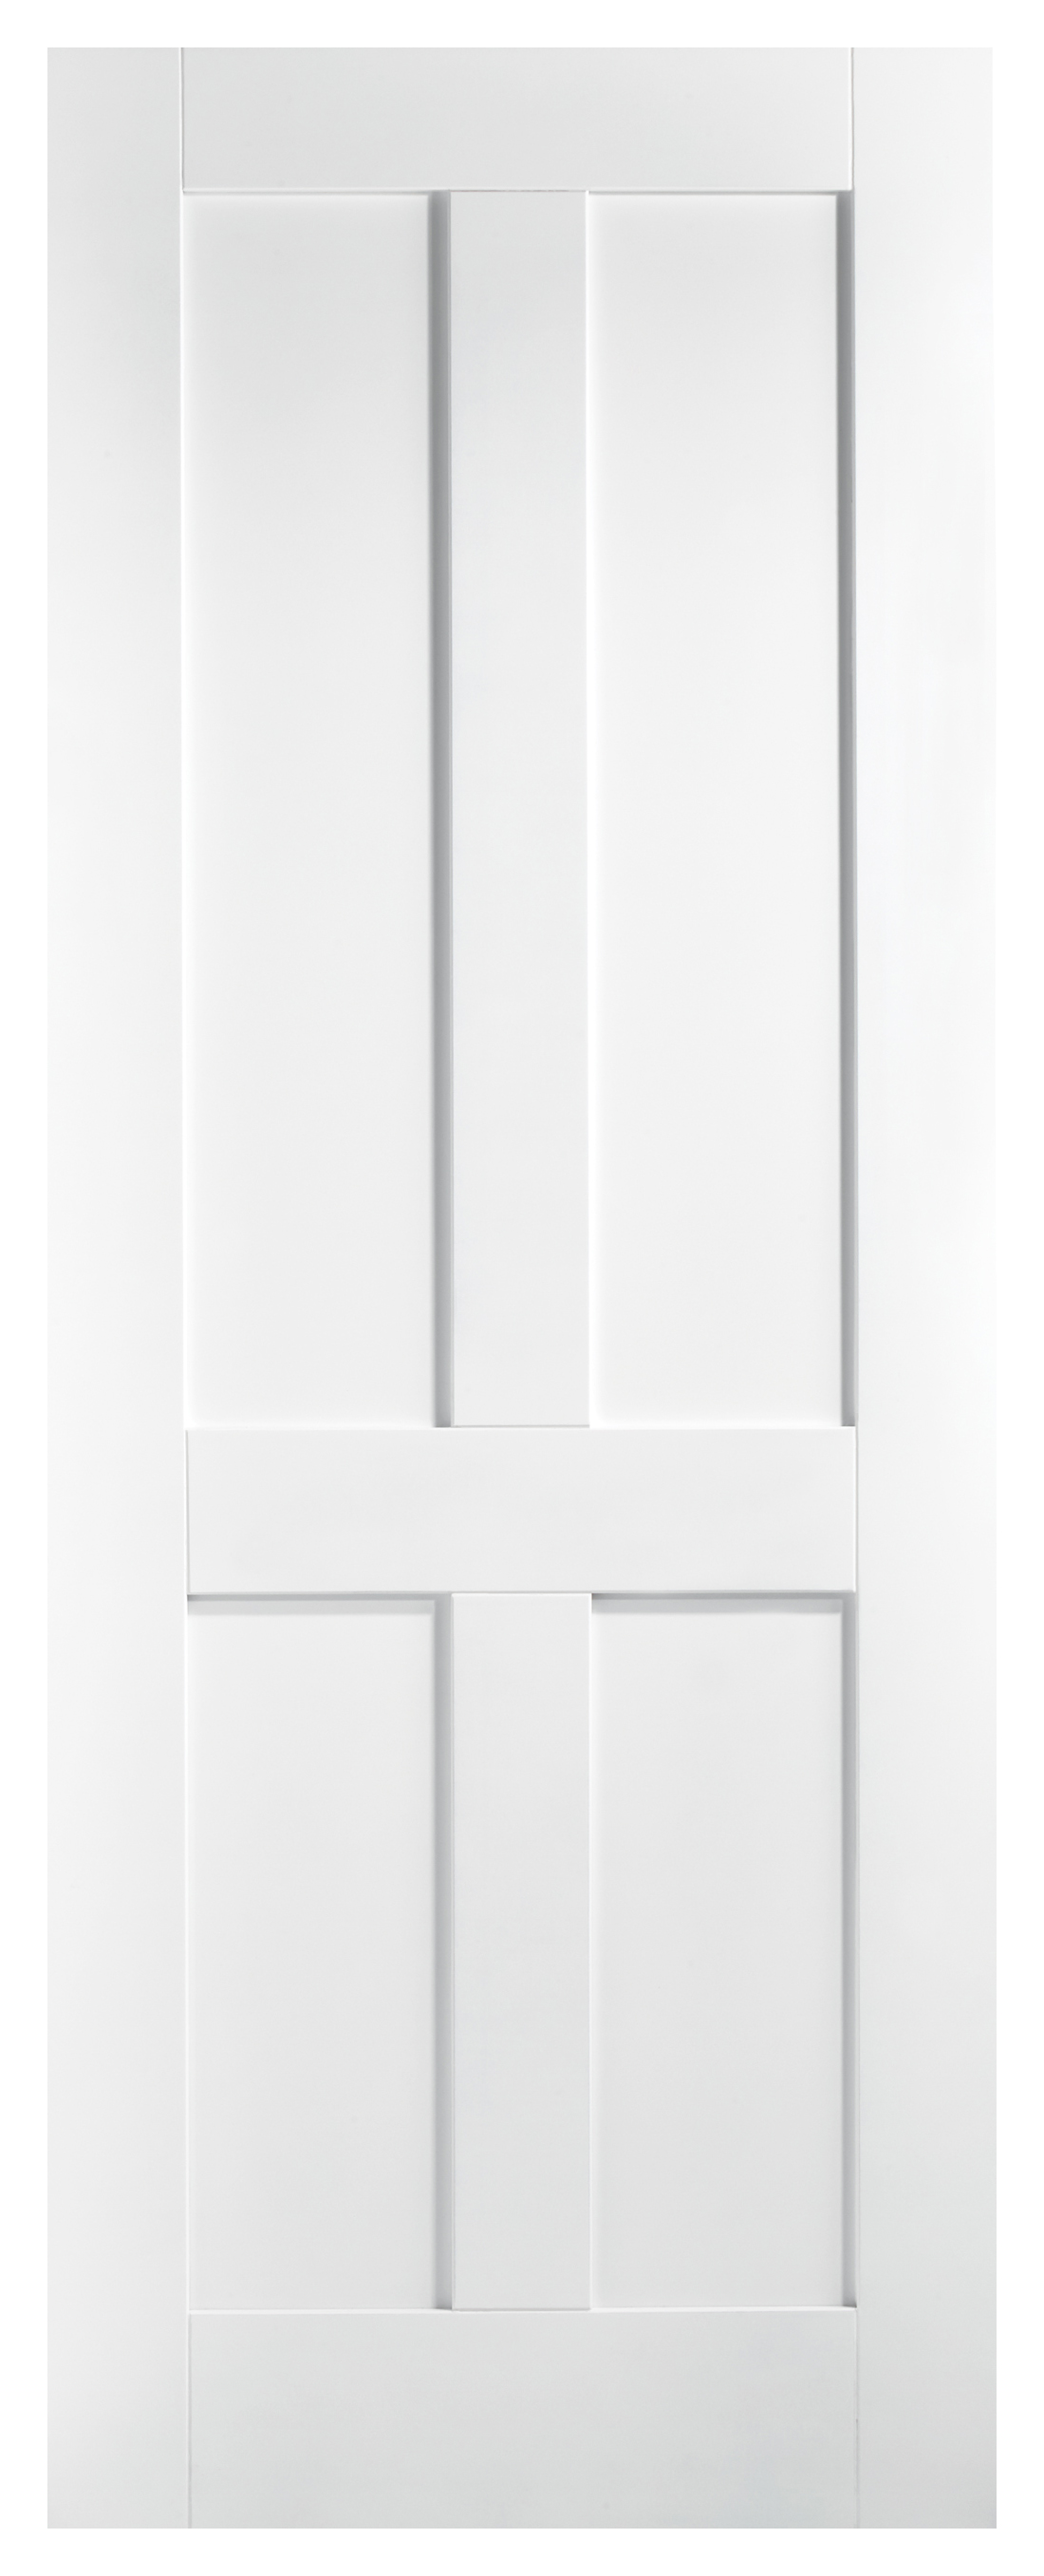 LPD Internal London 4 Panel Primed White FD30 Fire Door - 1981 mm